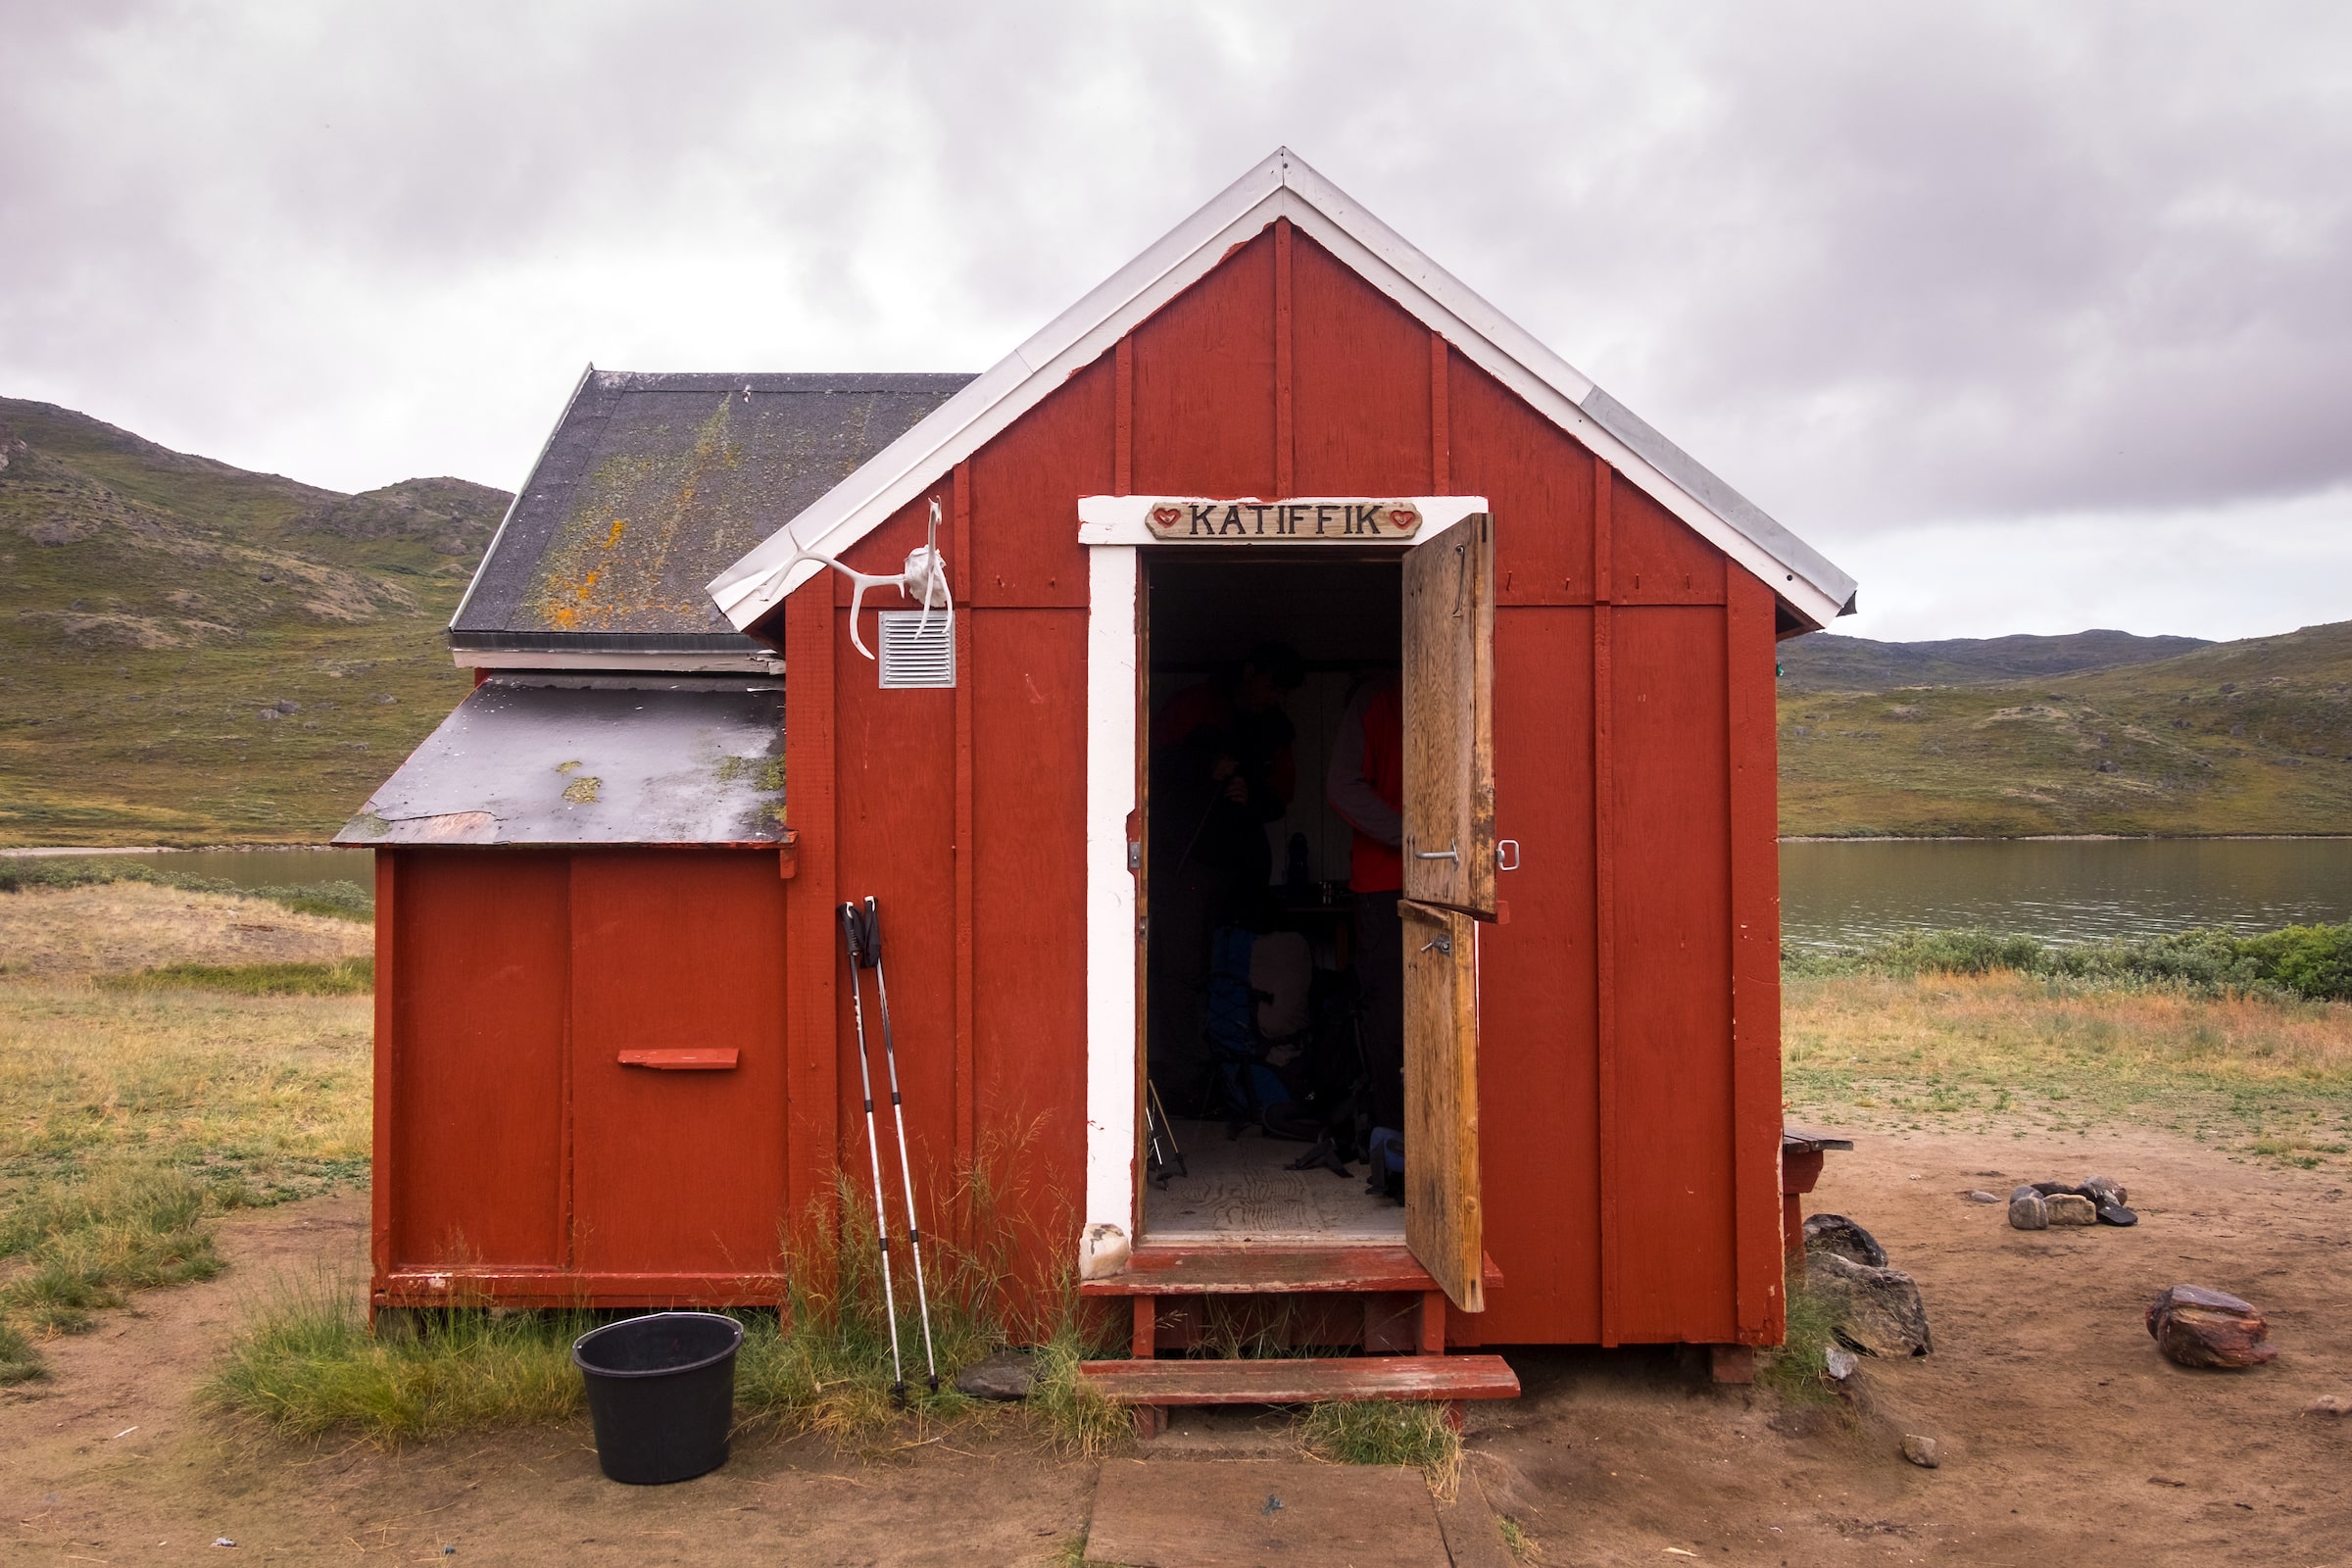 Katiffik Hut entrance - Day 1 of Arctic Circle Trail. Photo by Lisa Germany